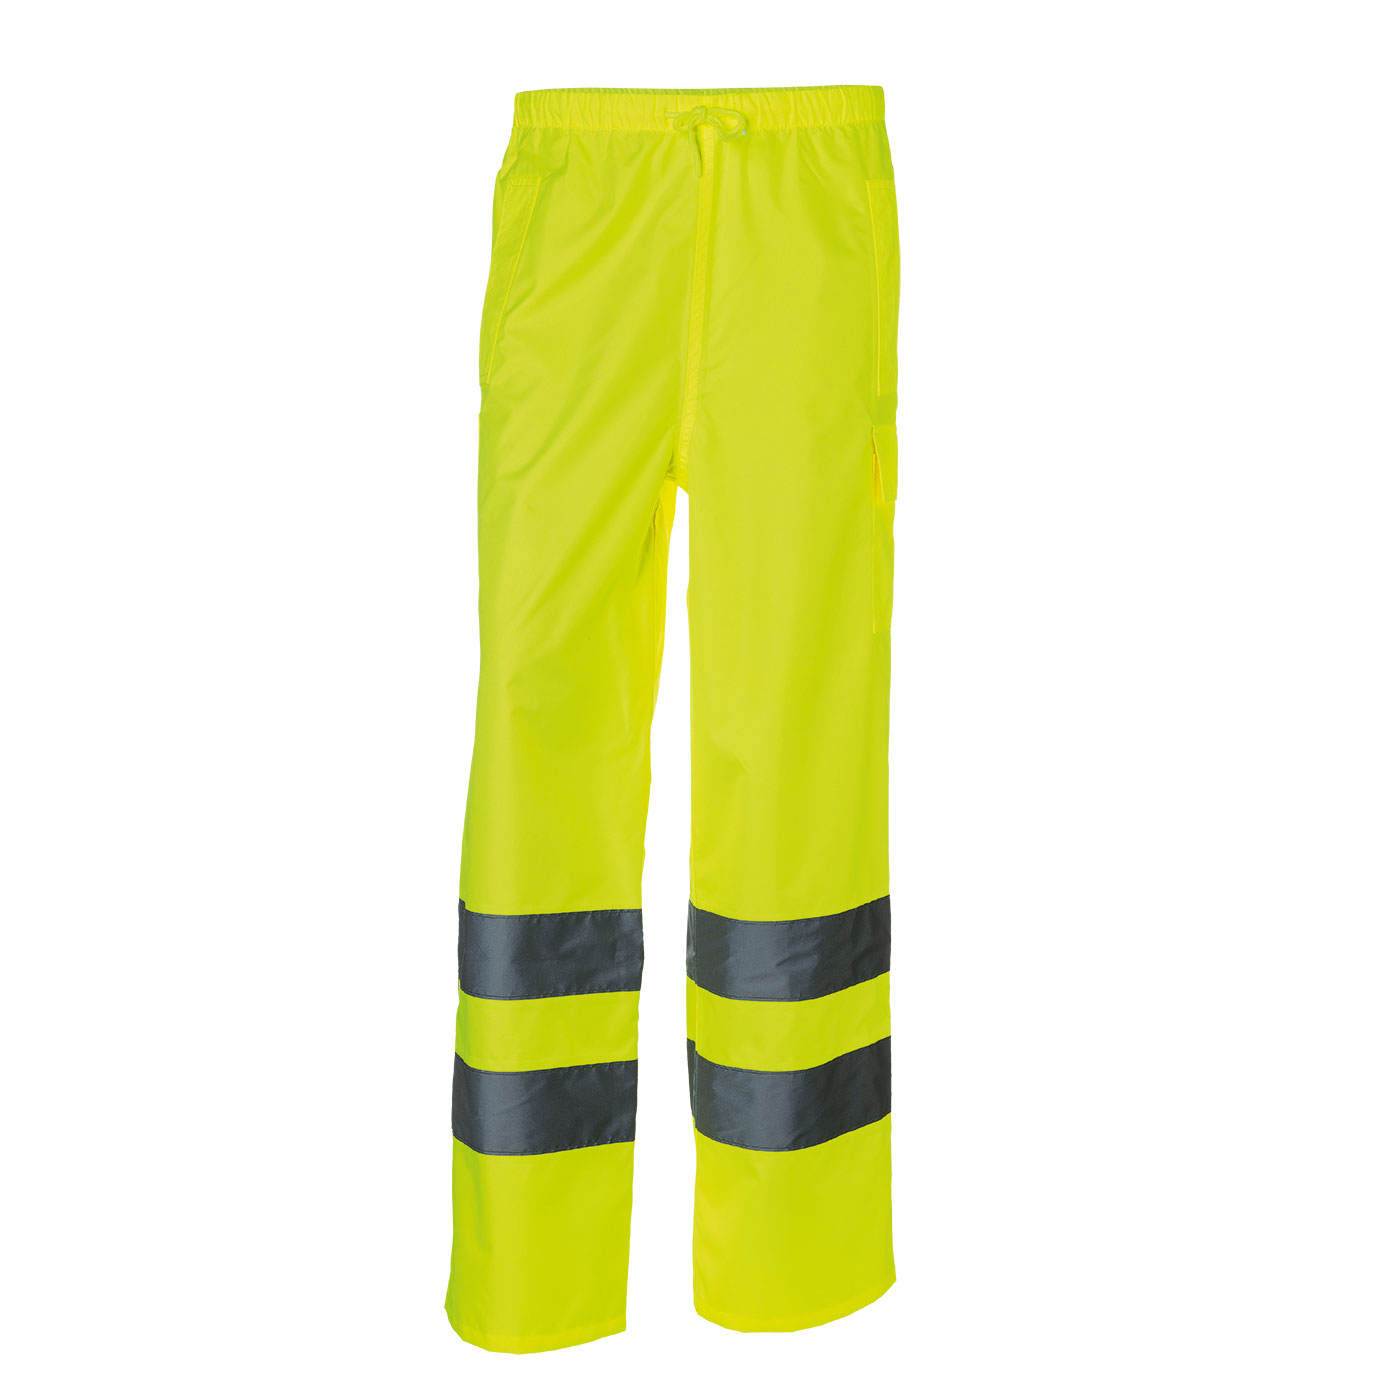 KÜBLER REFLECTIQ Rain Trousers PPE 2